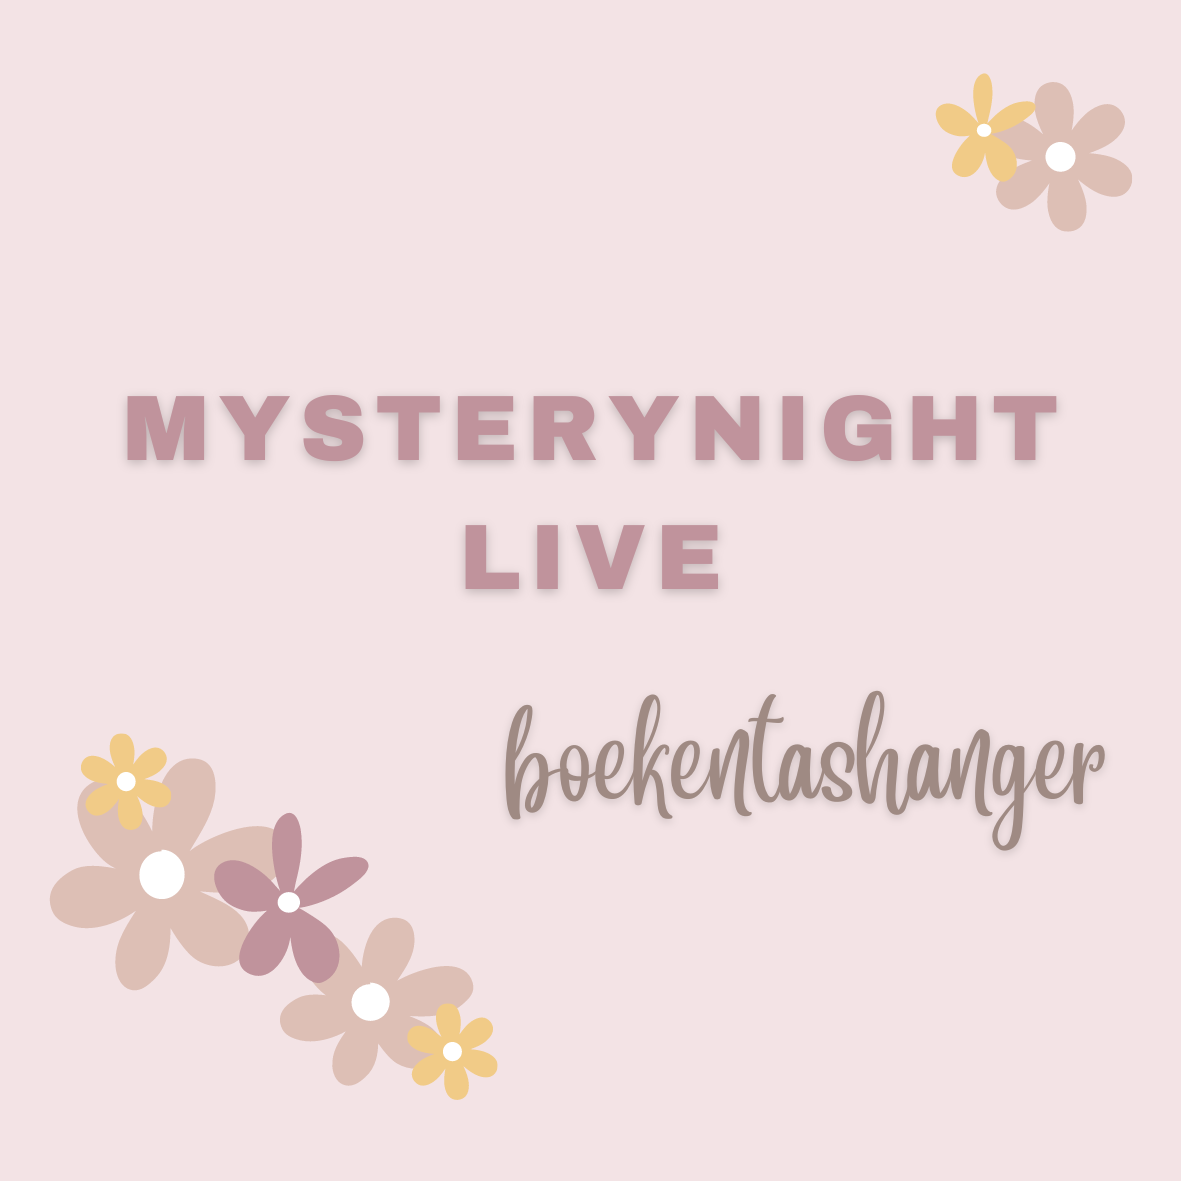 MYSTERYNIGHT LIVE - Boekentashanger